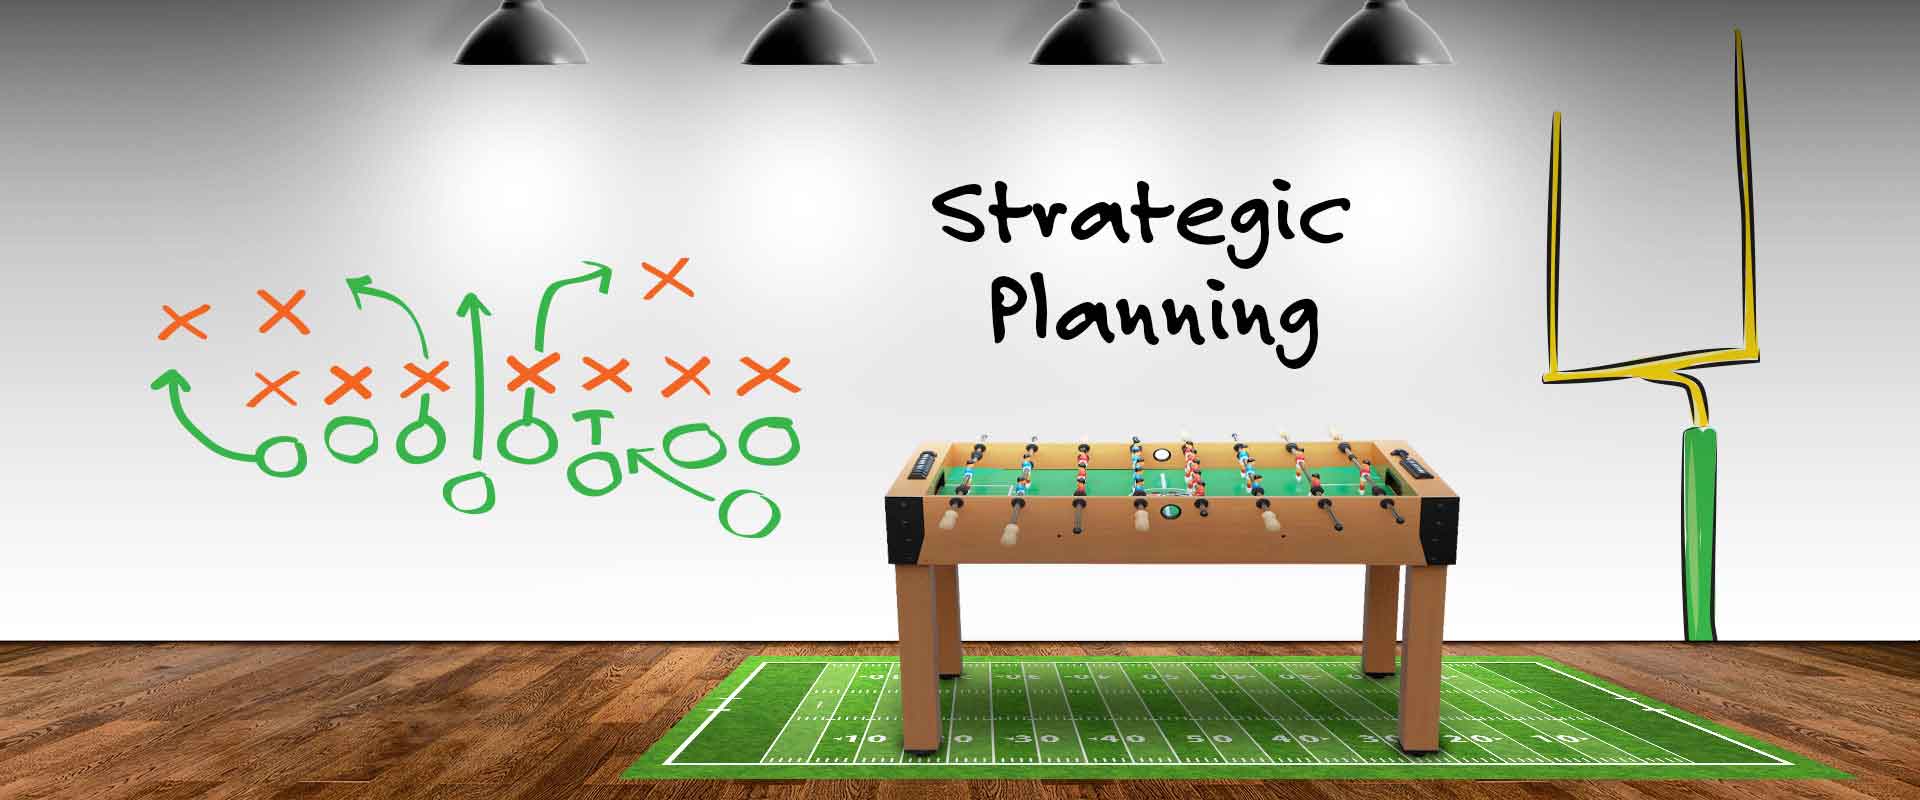 Strategic-Planning-Banner2